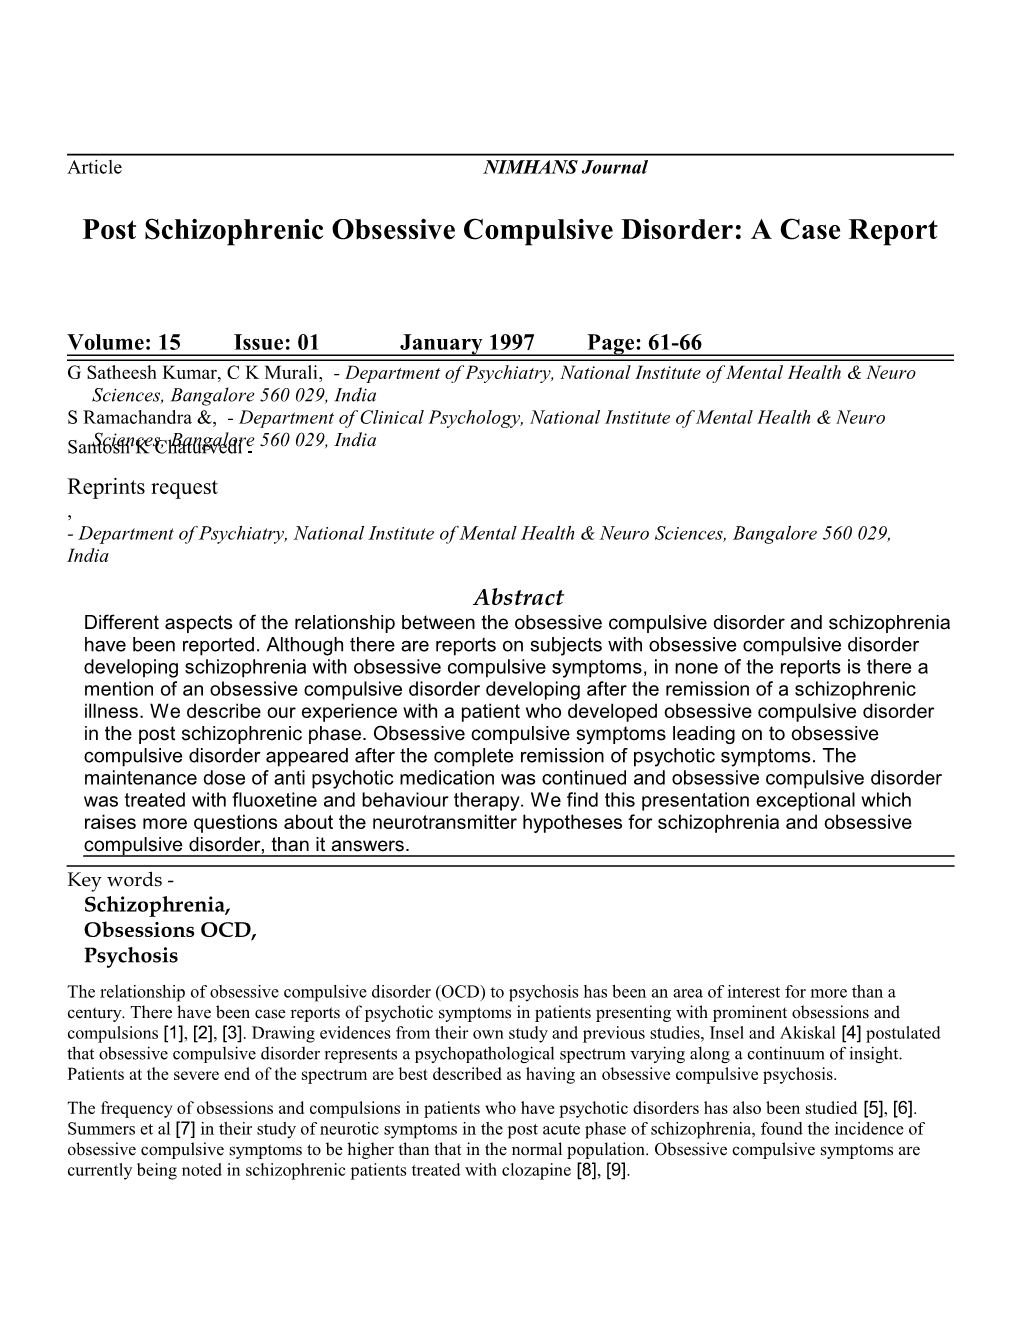 Post Schizophrenic Obsessive Compulsive Disorder: a Case Report